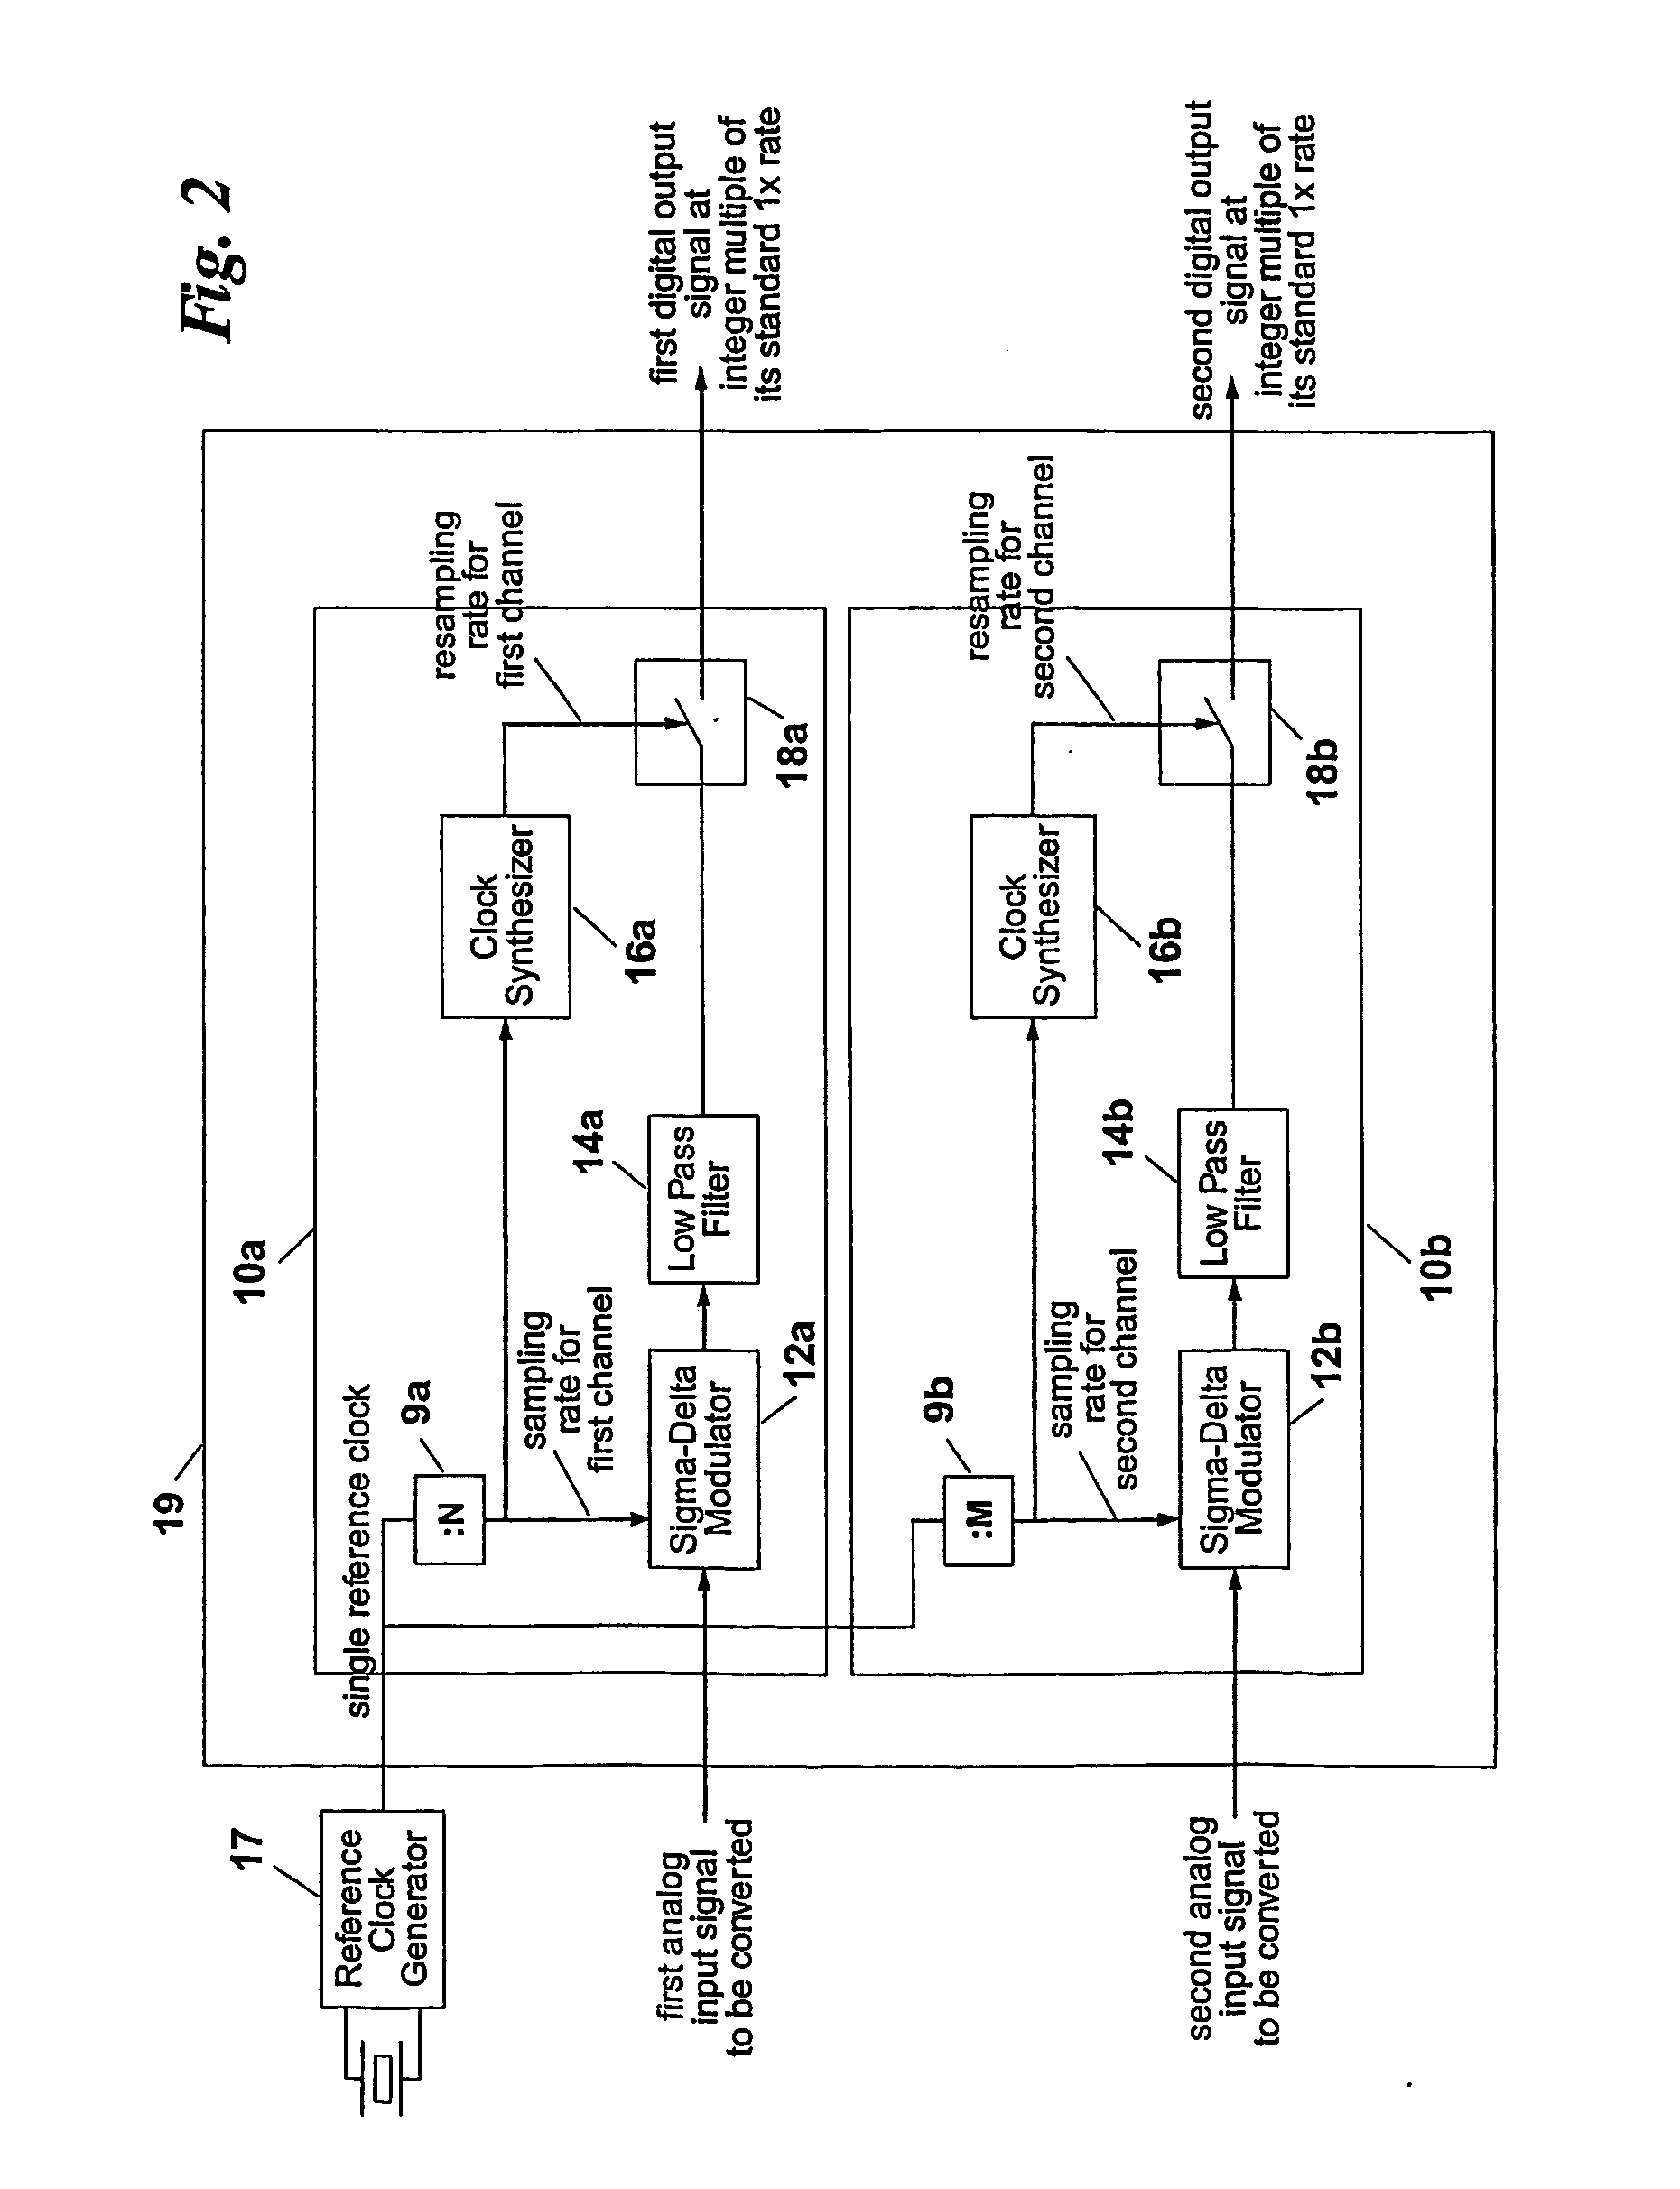 Multi-rate analog-to-digital converter